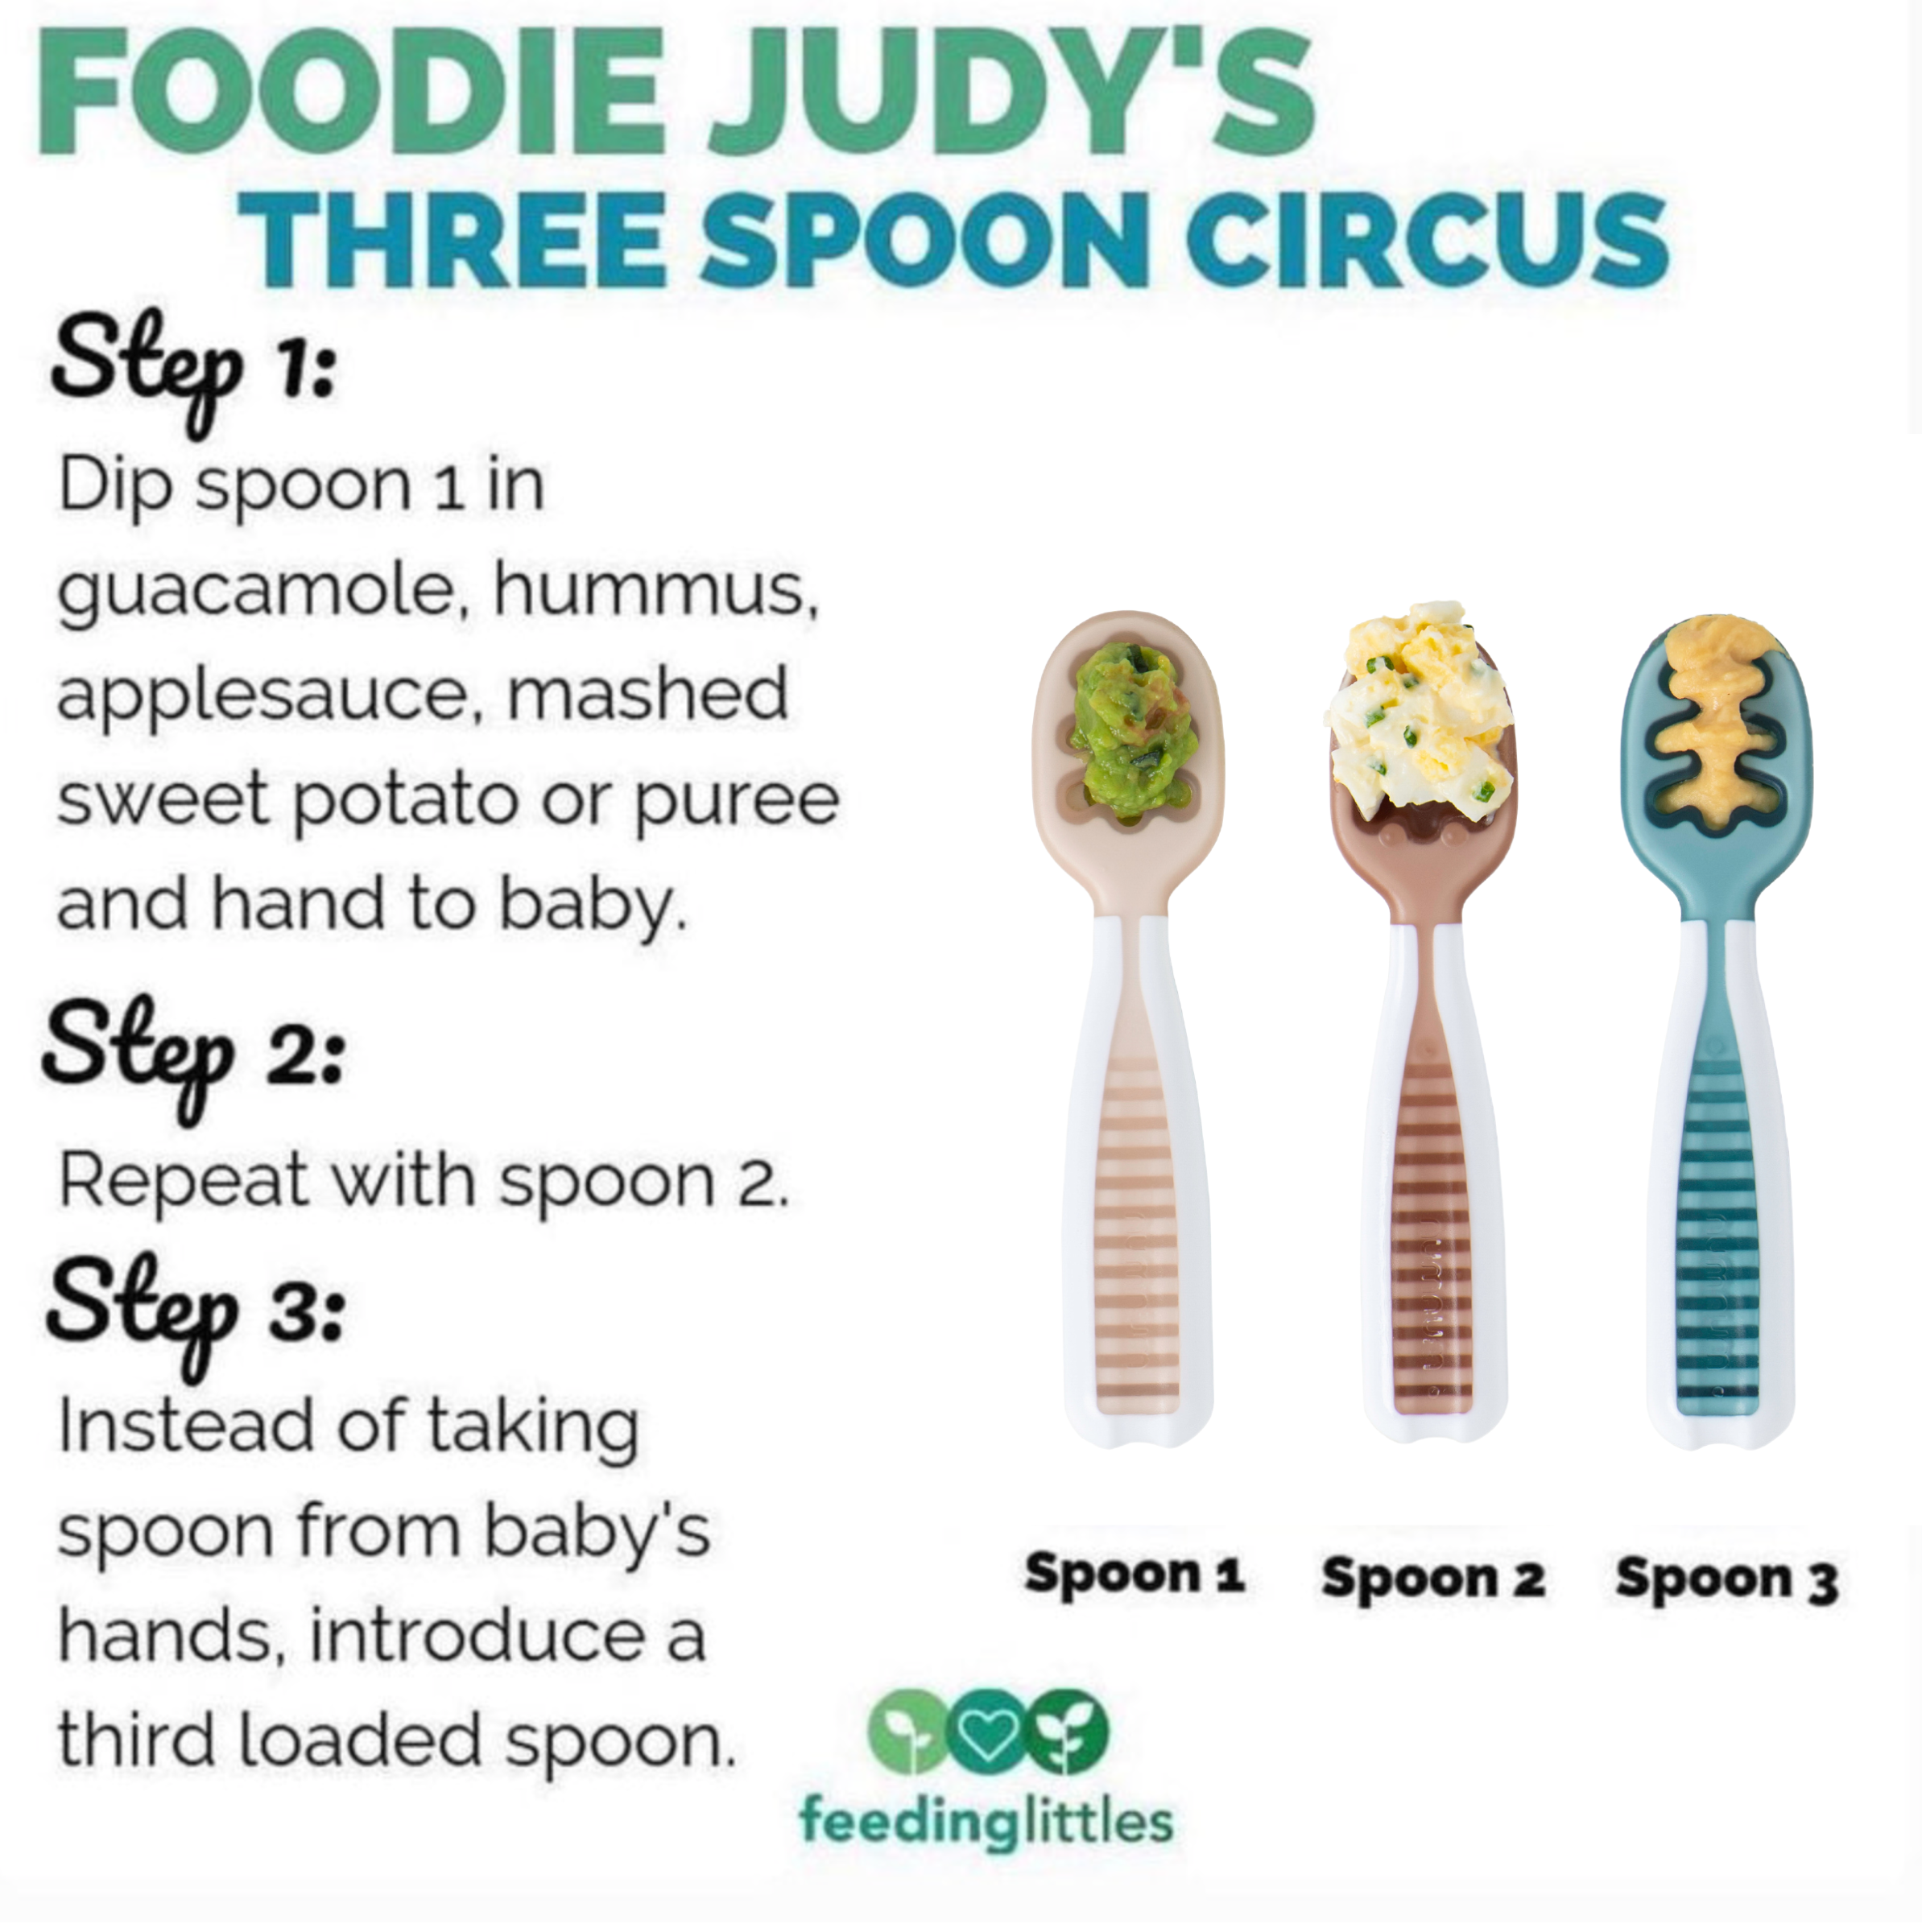 NumNum Pre-Spoon GOOtensils  Baby Spoon Set (Stage One + Stage